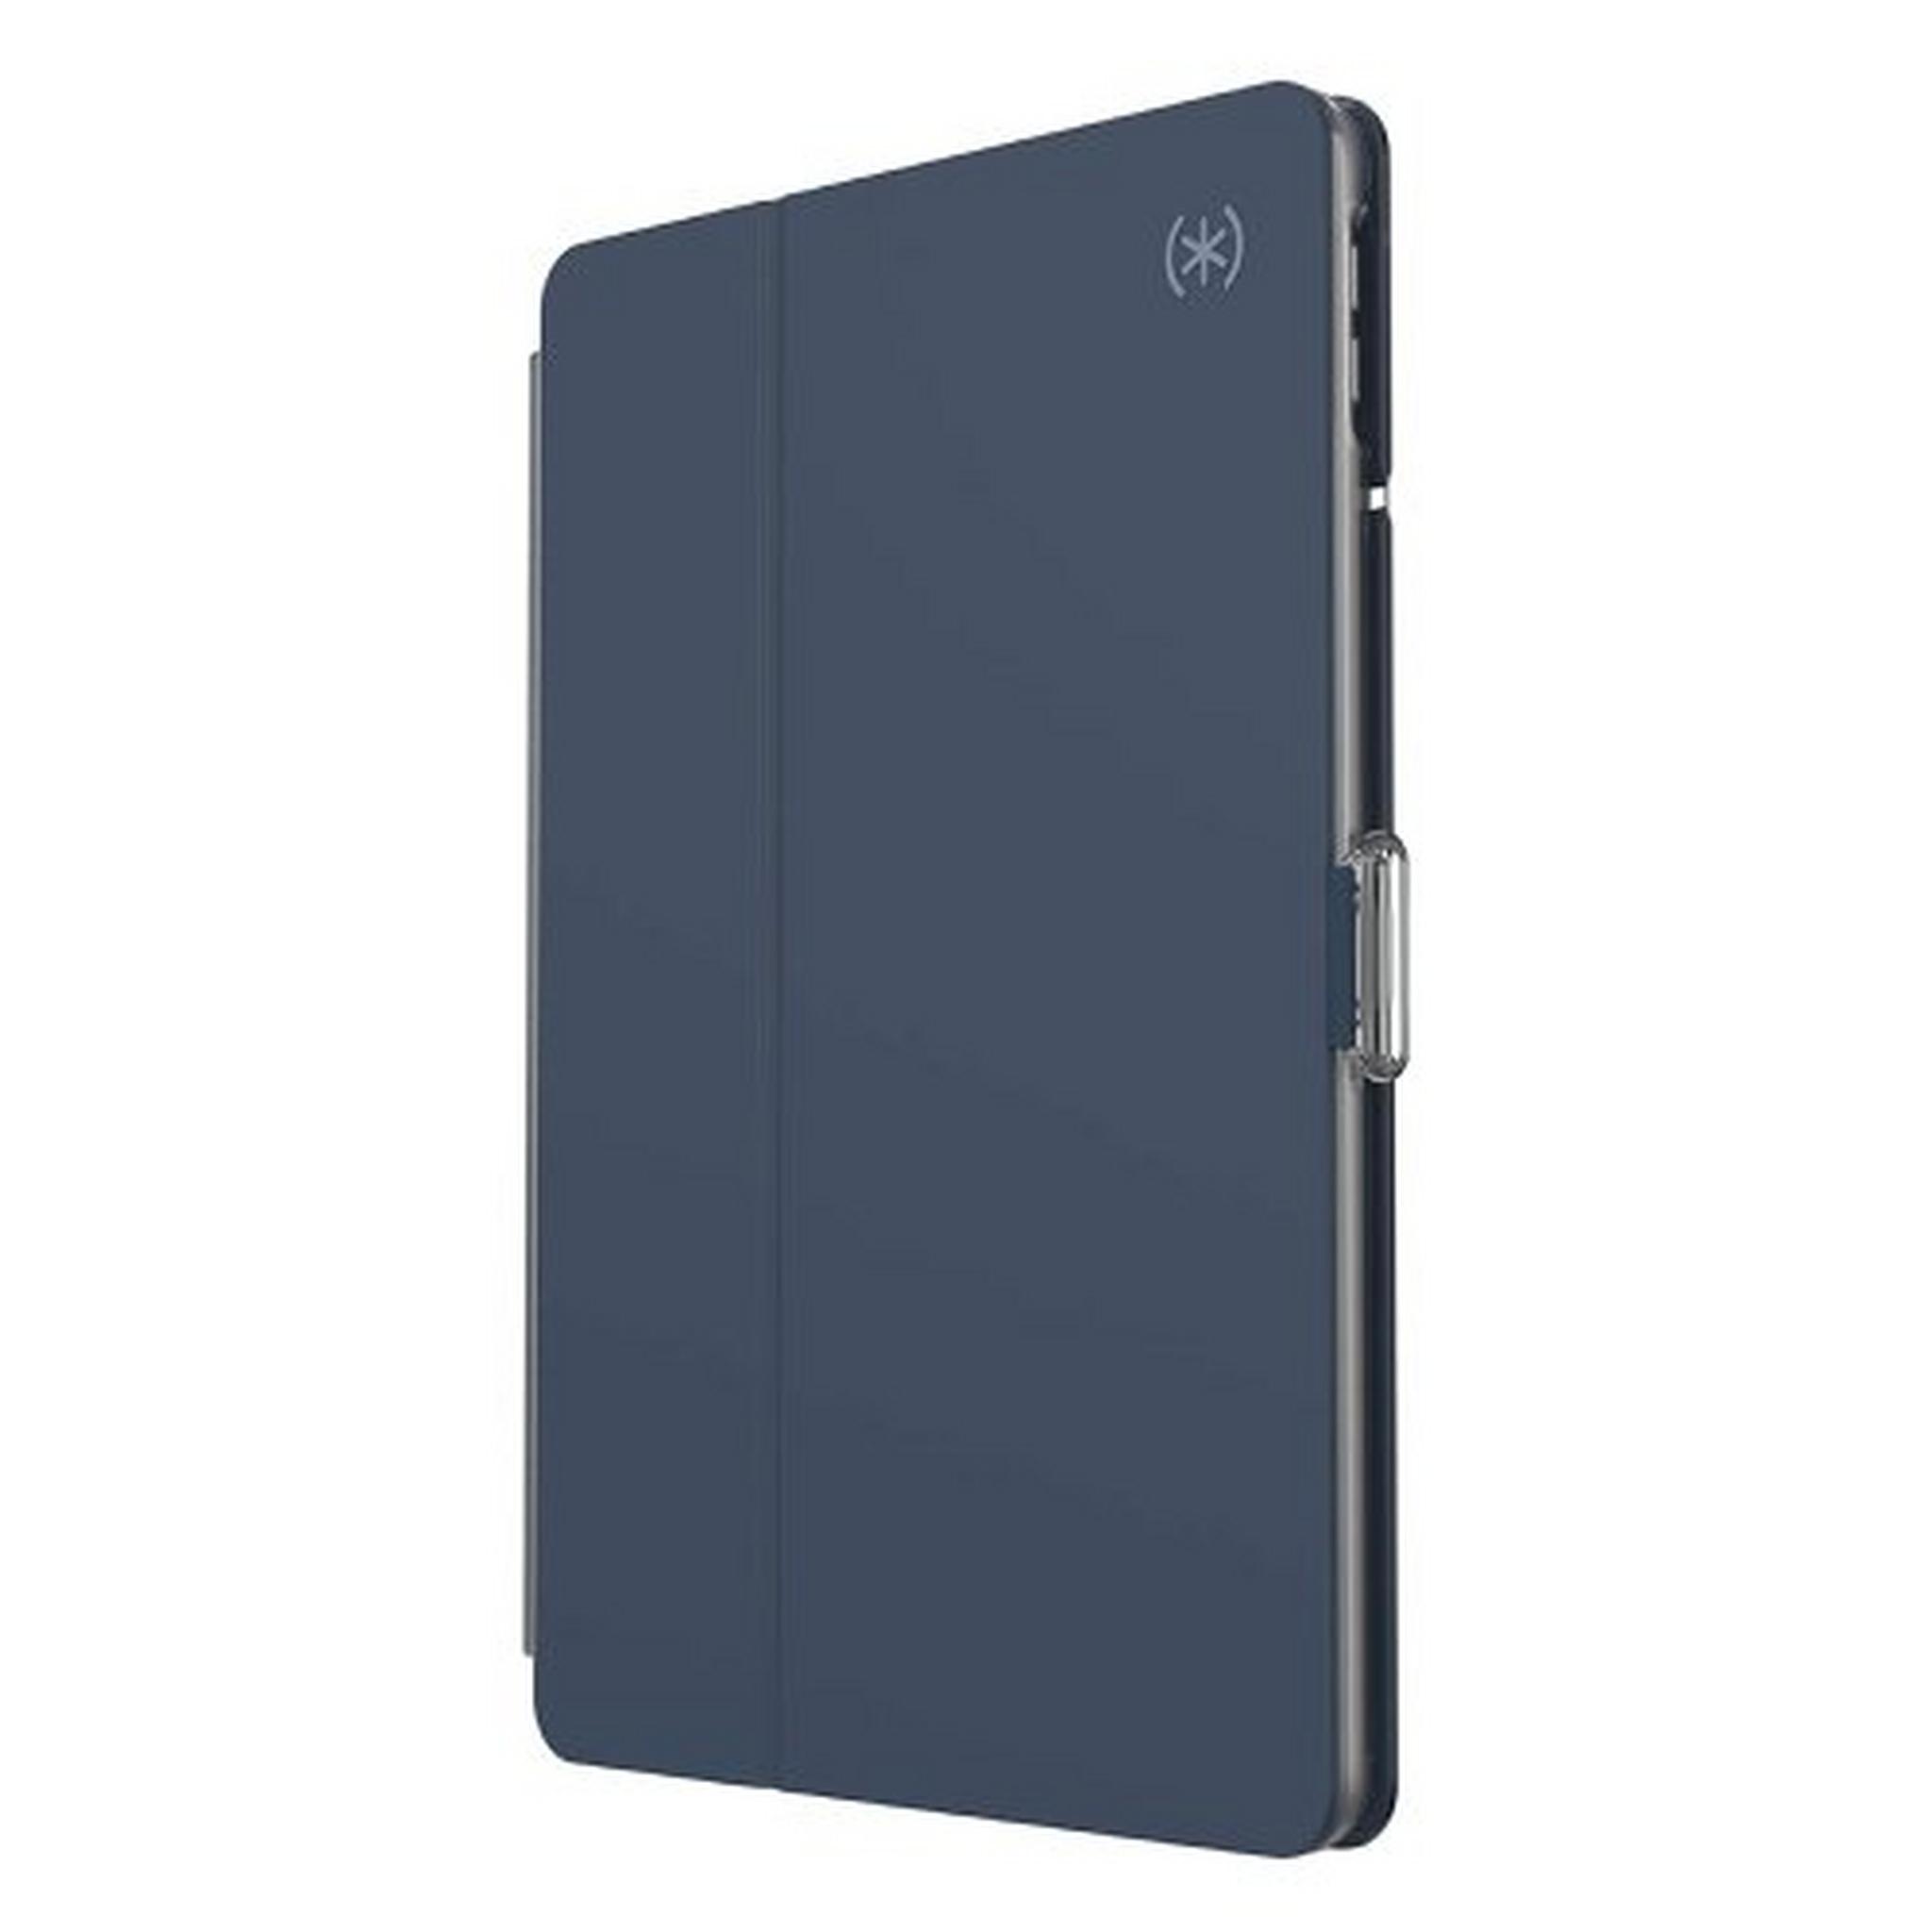 Speck Balance Folio 10.2-inch iPad Case - Navy Blue